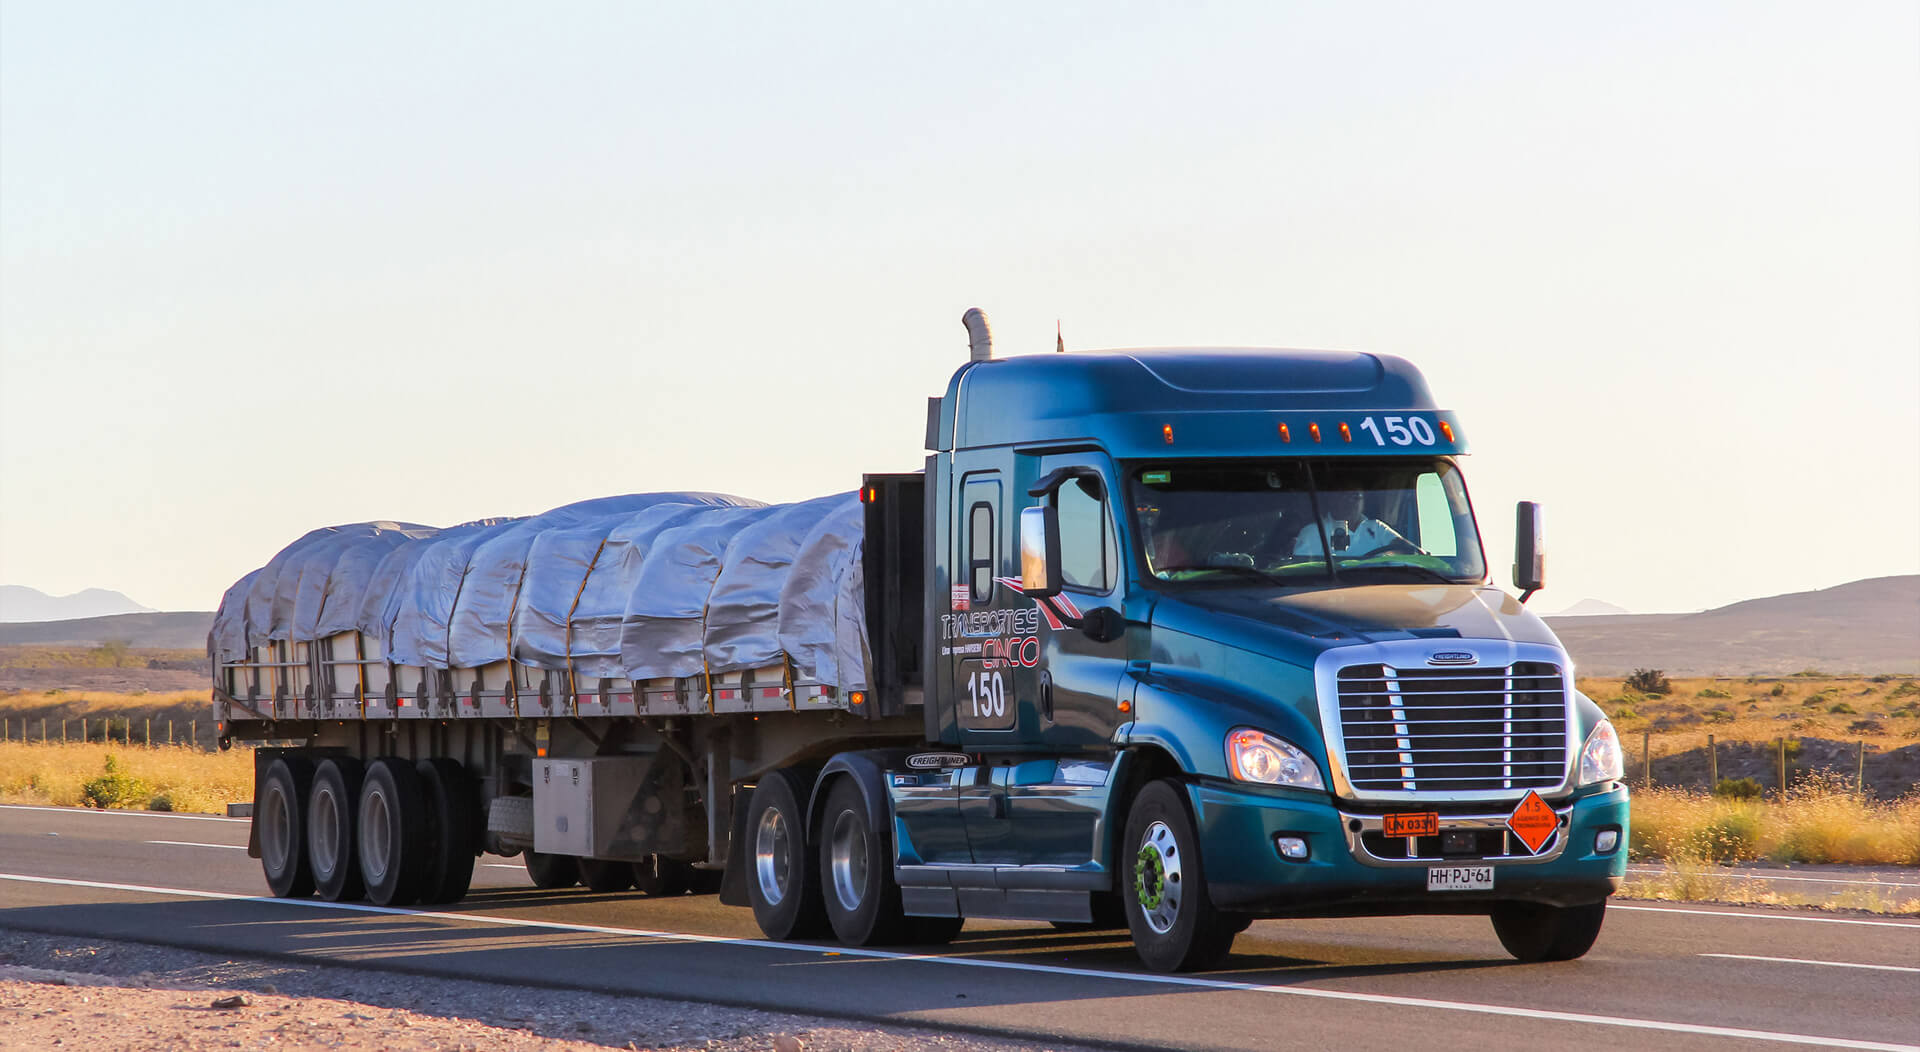 semi-trailer truck Freightliner Cascadia drives at the interurban freeway